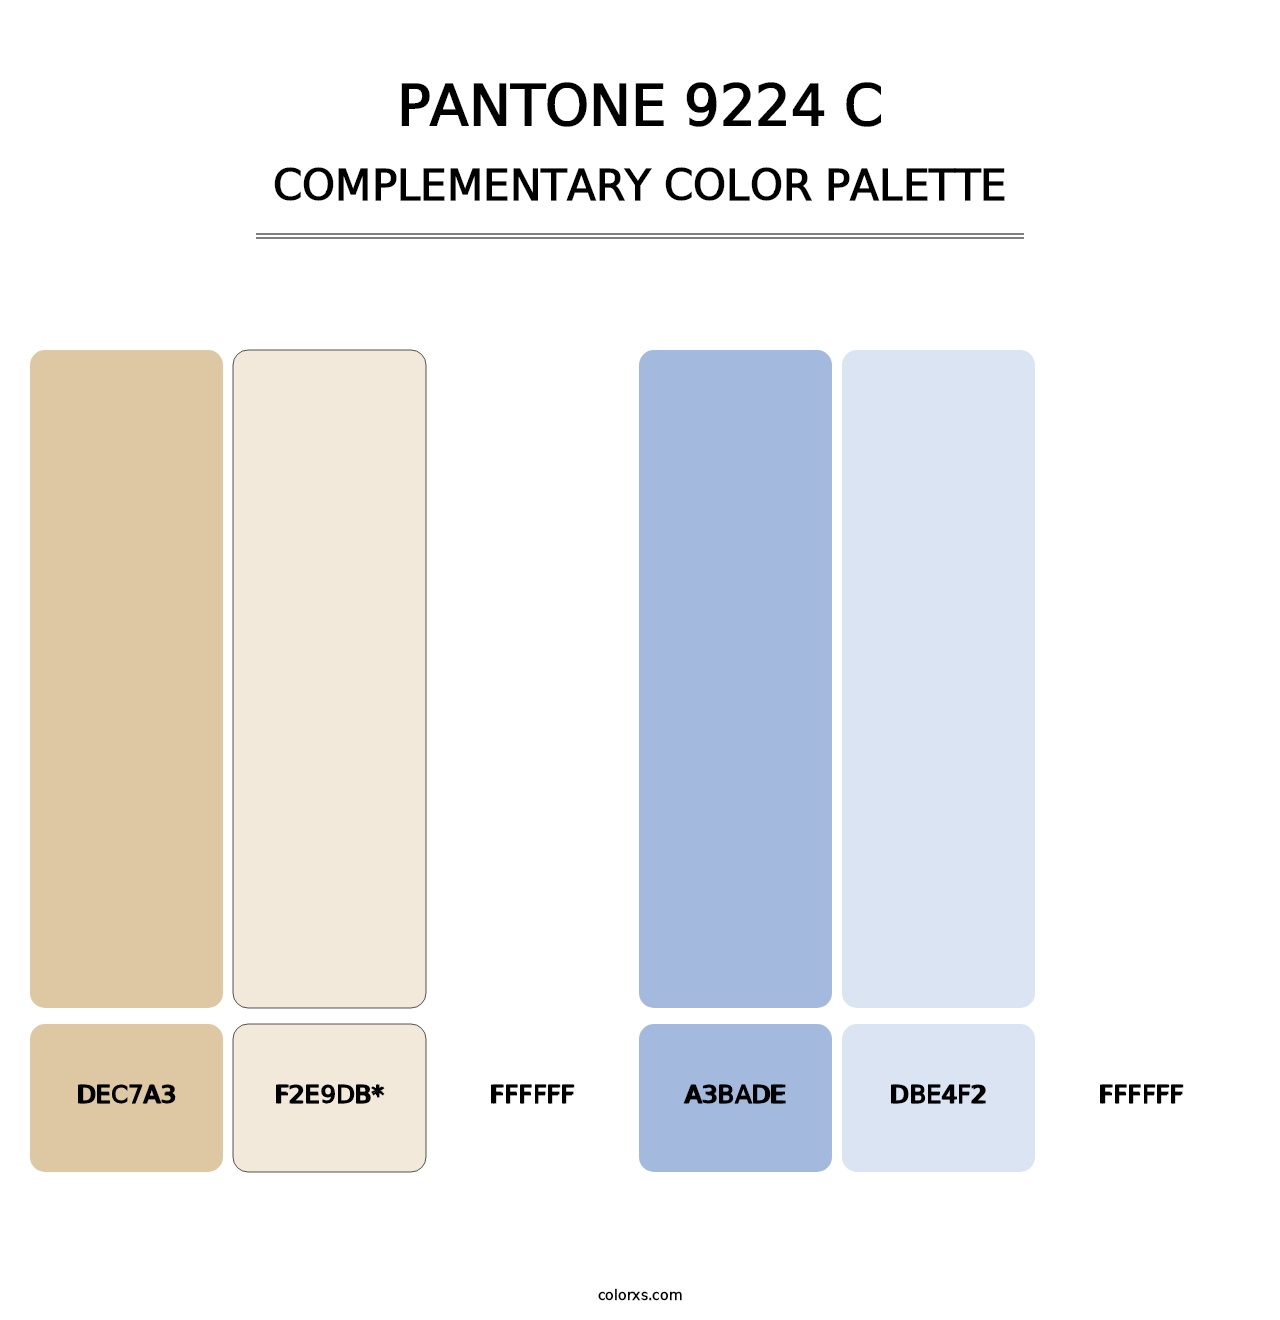 PANTONE 9224 C - Complementary Color Palette